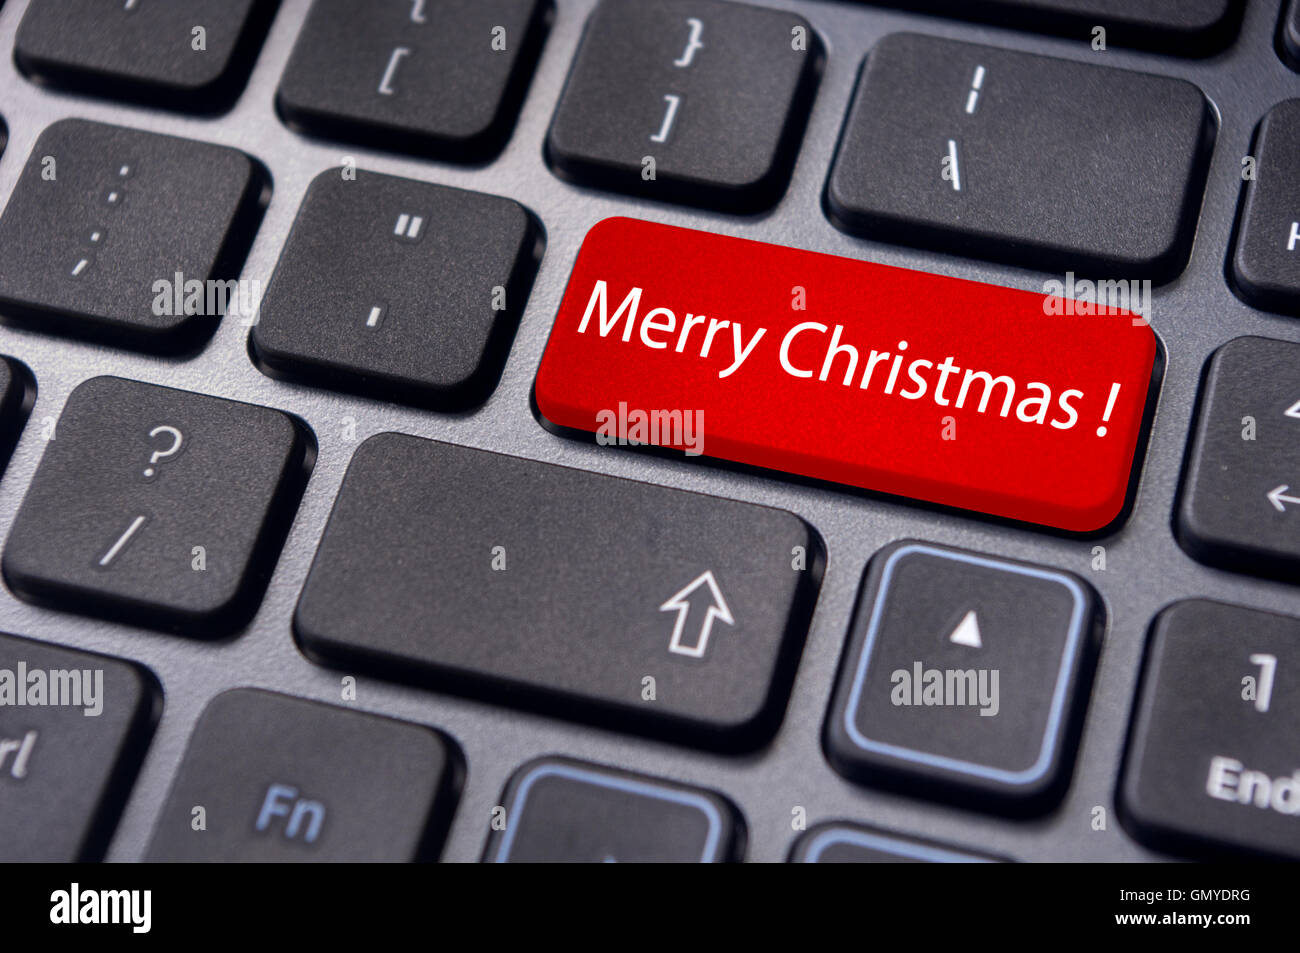 merry christmas greetings on keyboard enter key Stock Photo